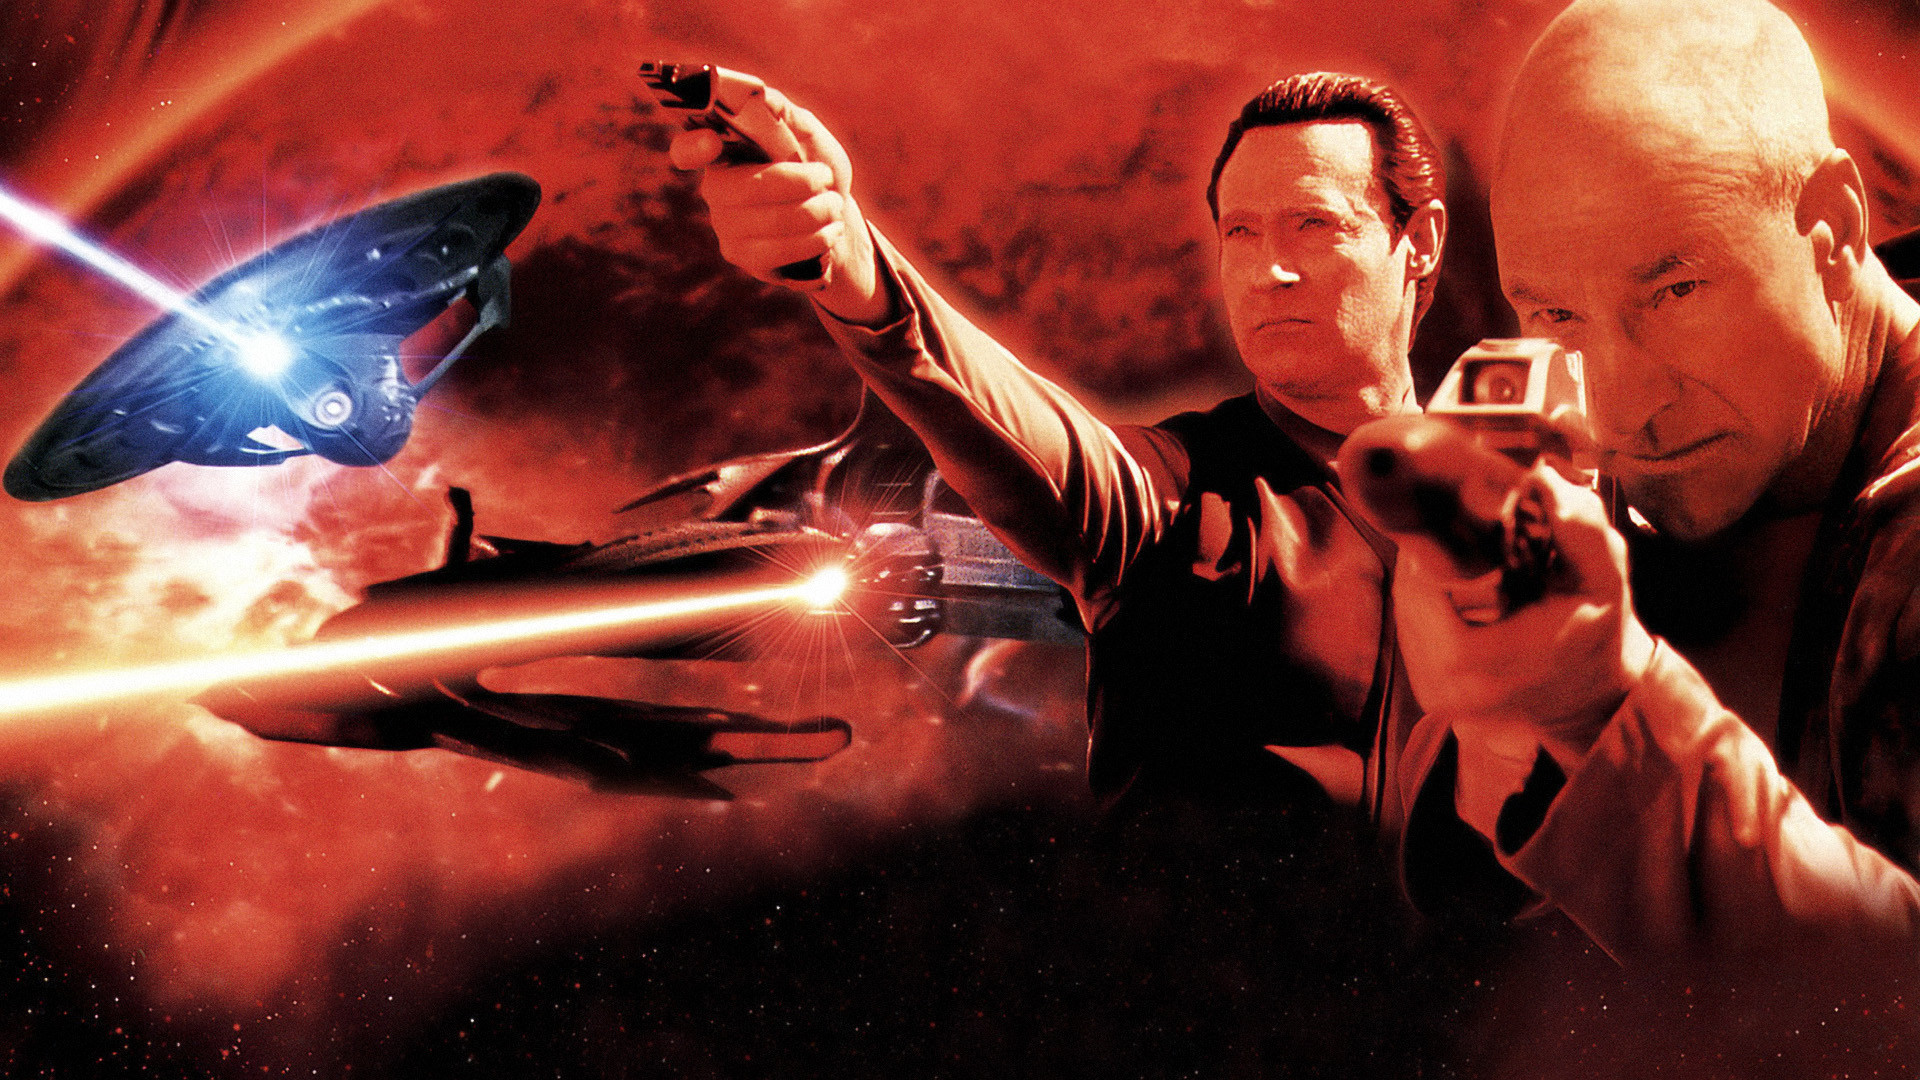 Movie Star Trek: Insurrection HD Wallpapers. 